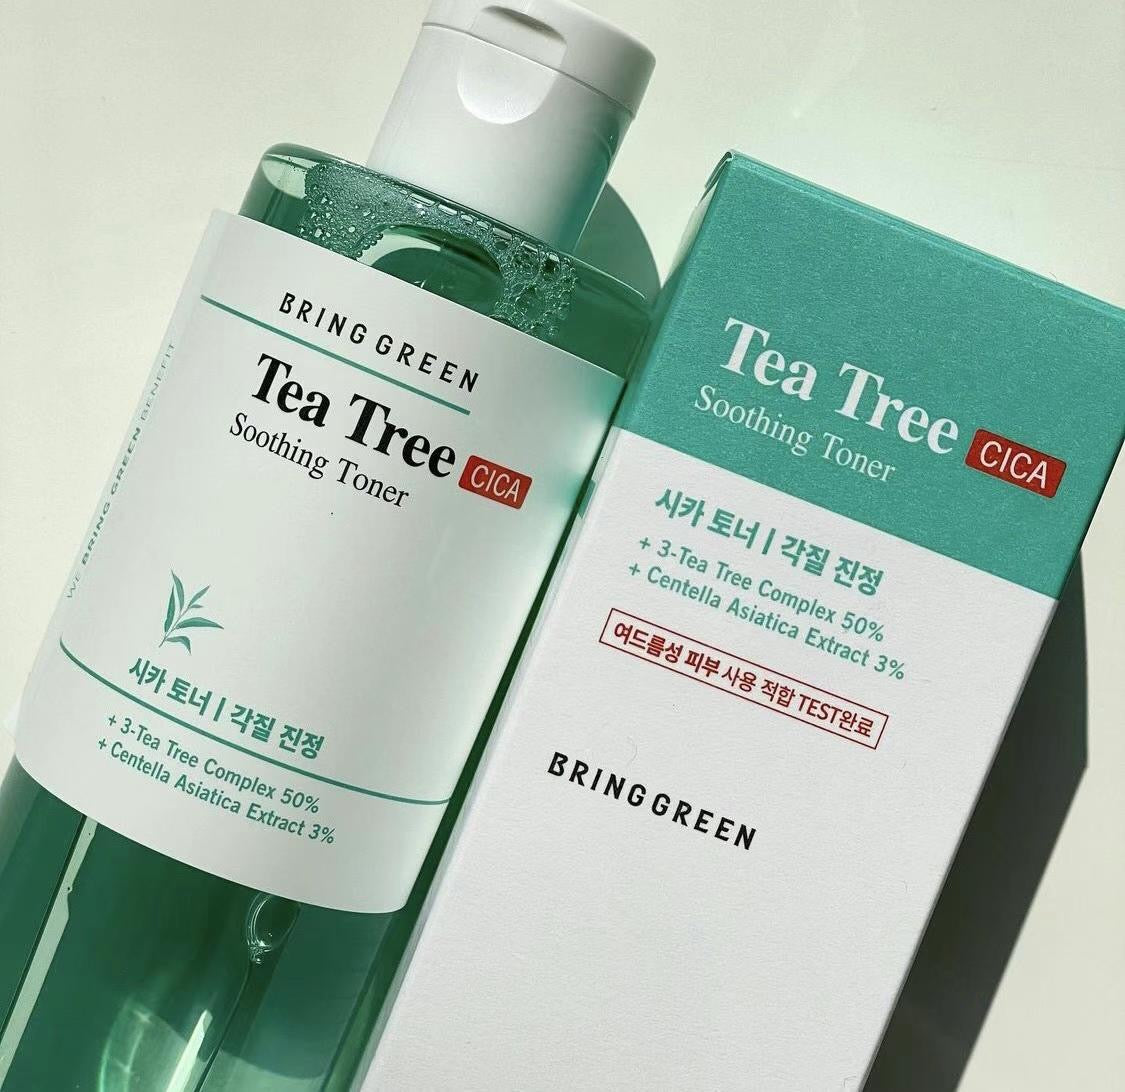 韓國 Bring Green Tea Tree CICA Soothing Toner 茶樹積雪草舒緩爽膚水 超大容量510ml 🌿